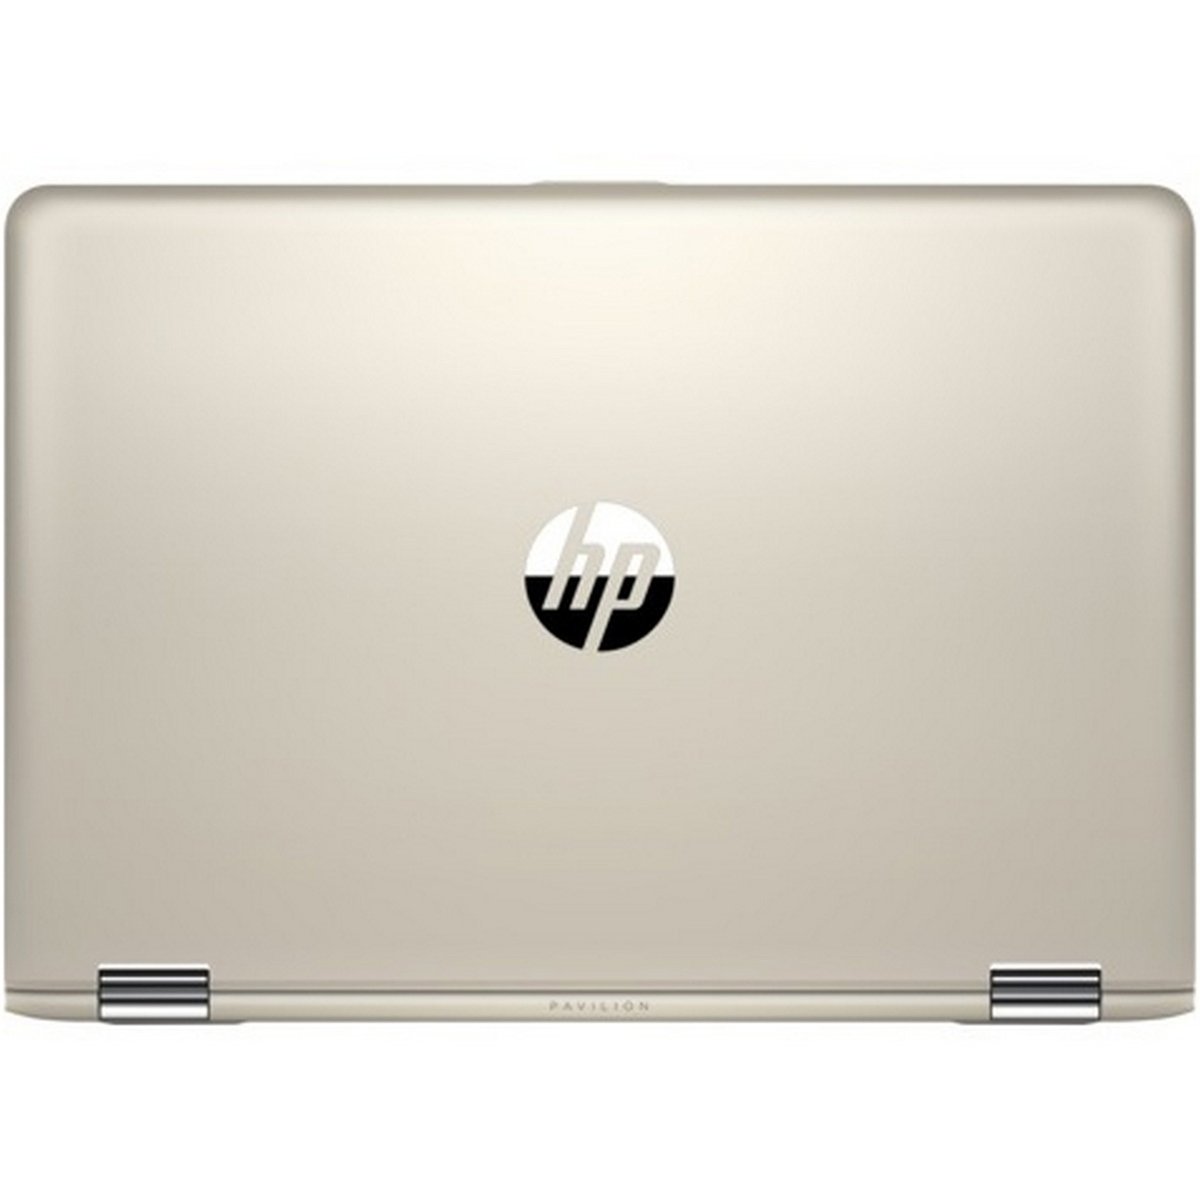 HP Pavillion X360 Convertible Notebook 14ba002ne Core i3 Gold